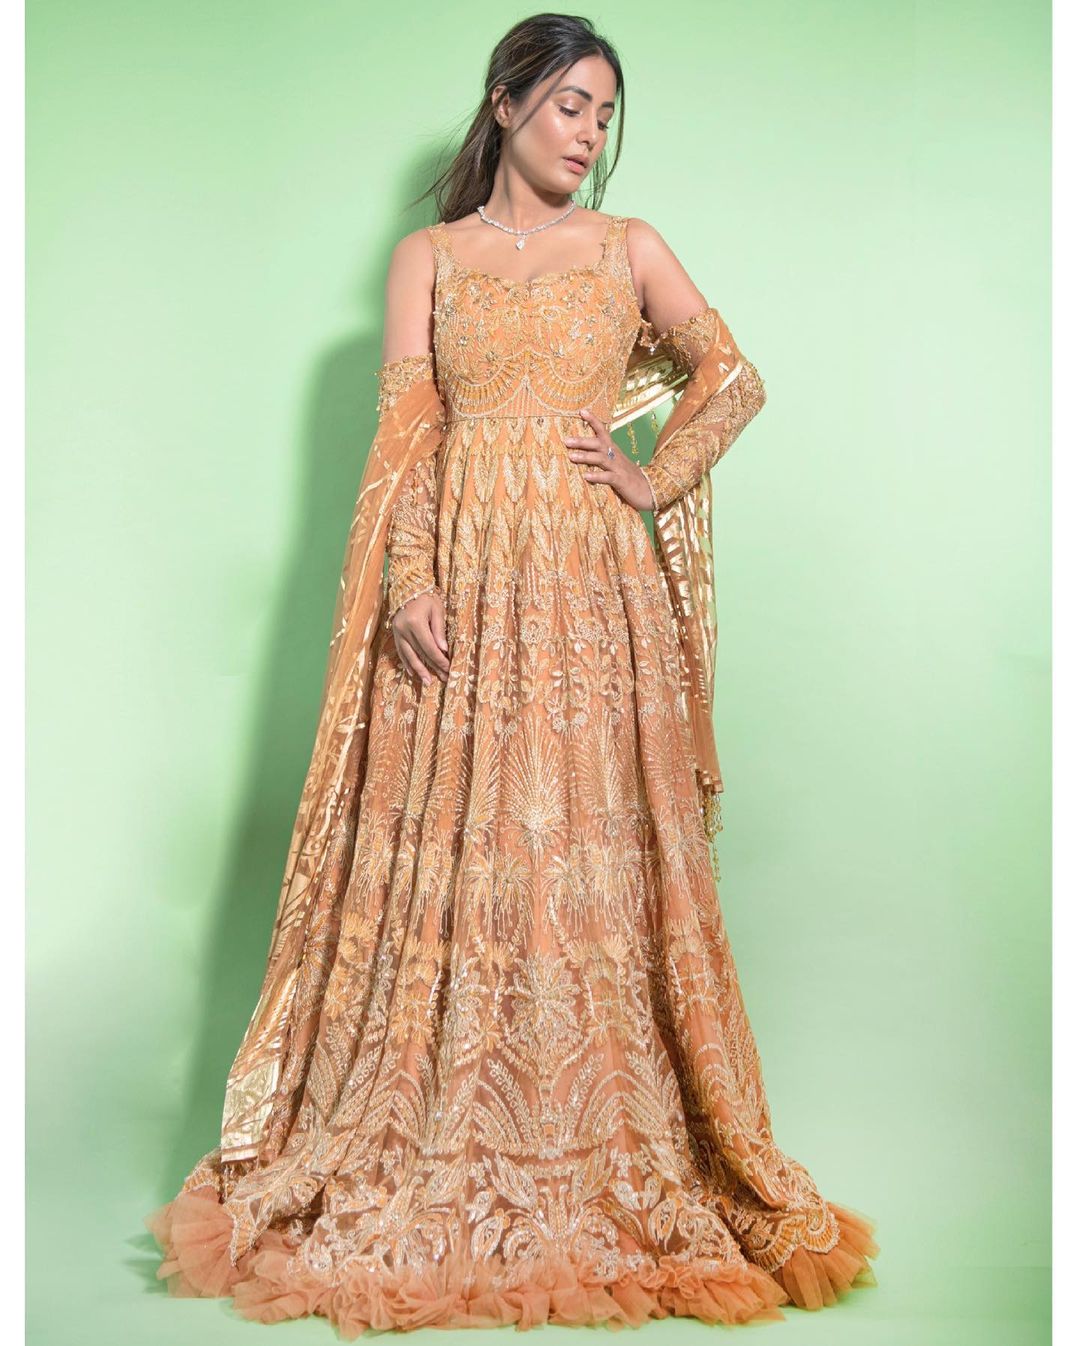 Hina Khan looks regal in the floor-length anarkali suit. 